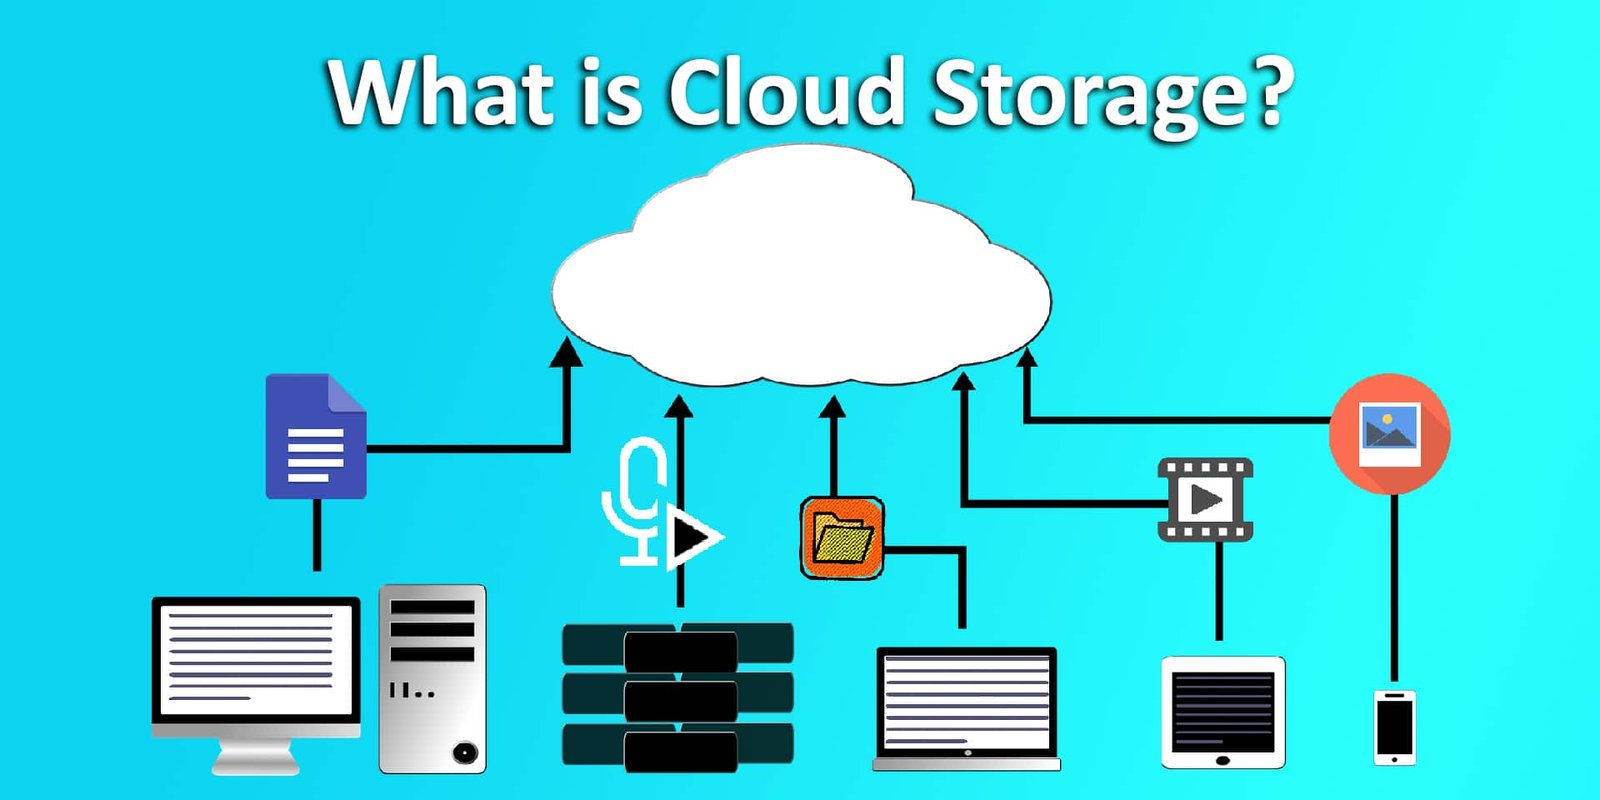 microsoft cloud storage cost